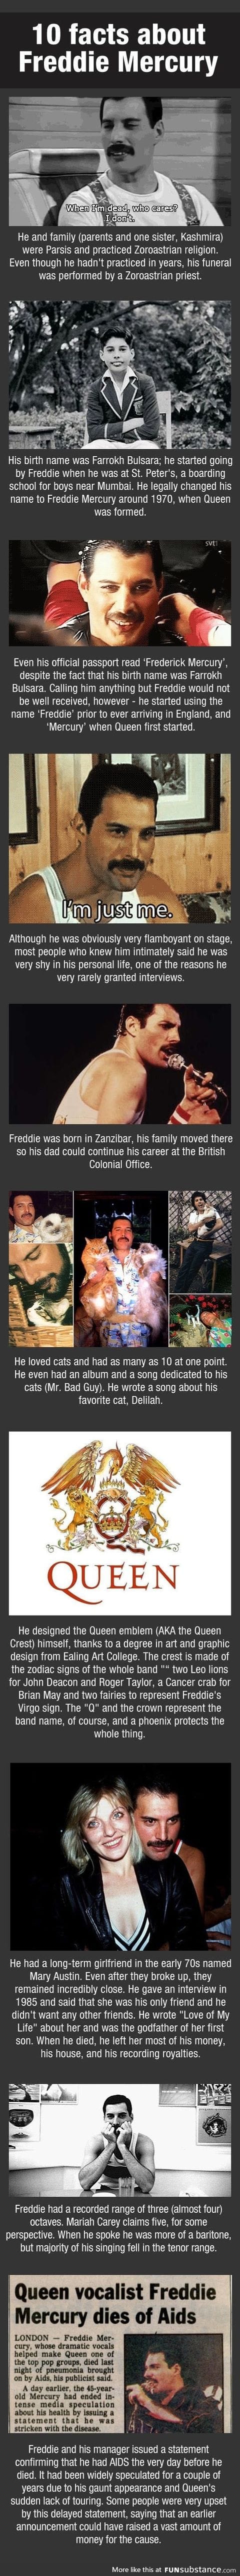 Freddie Mercury facts